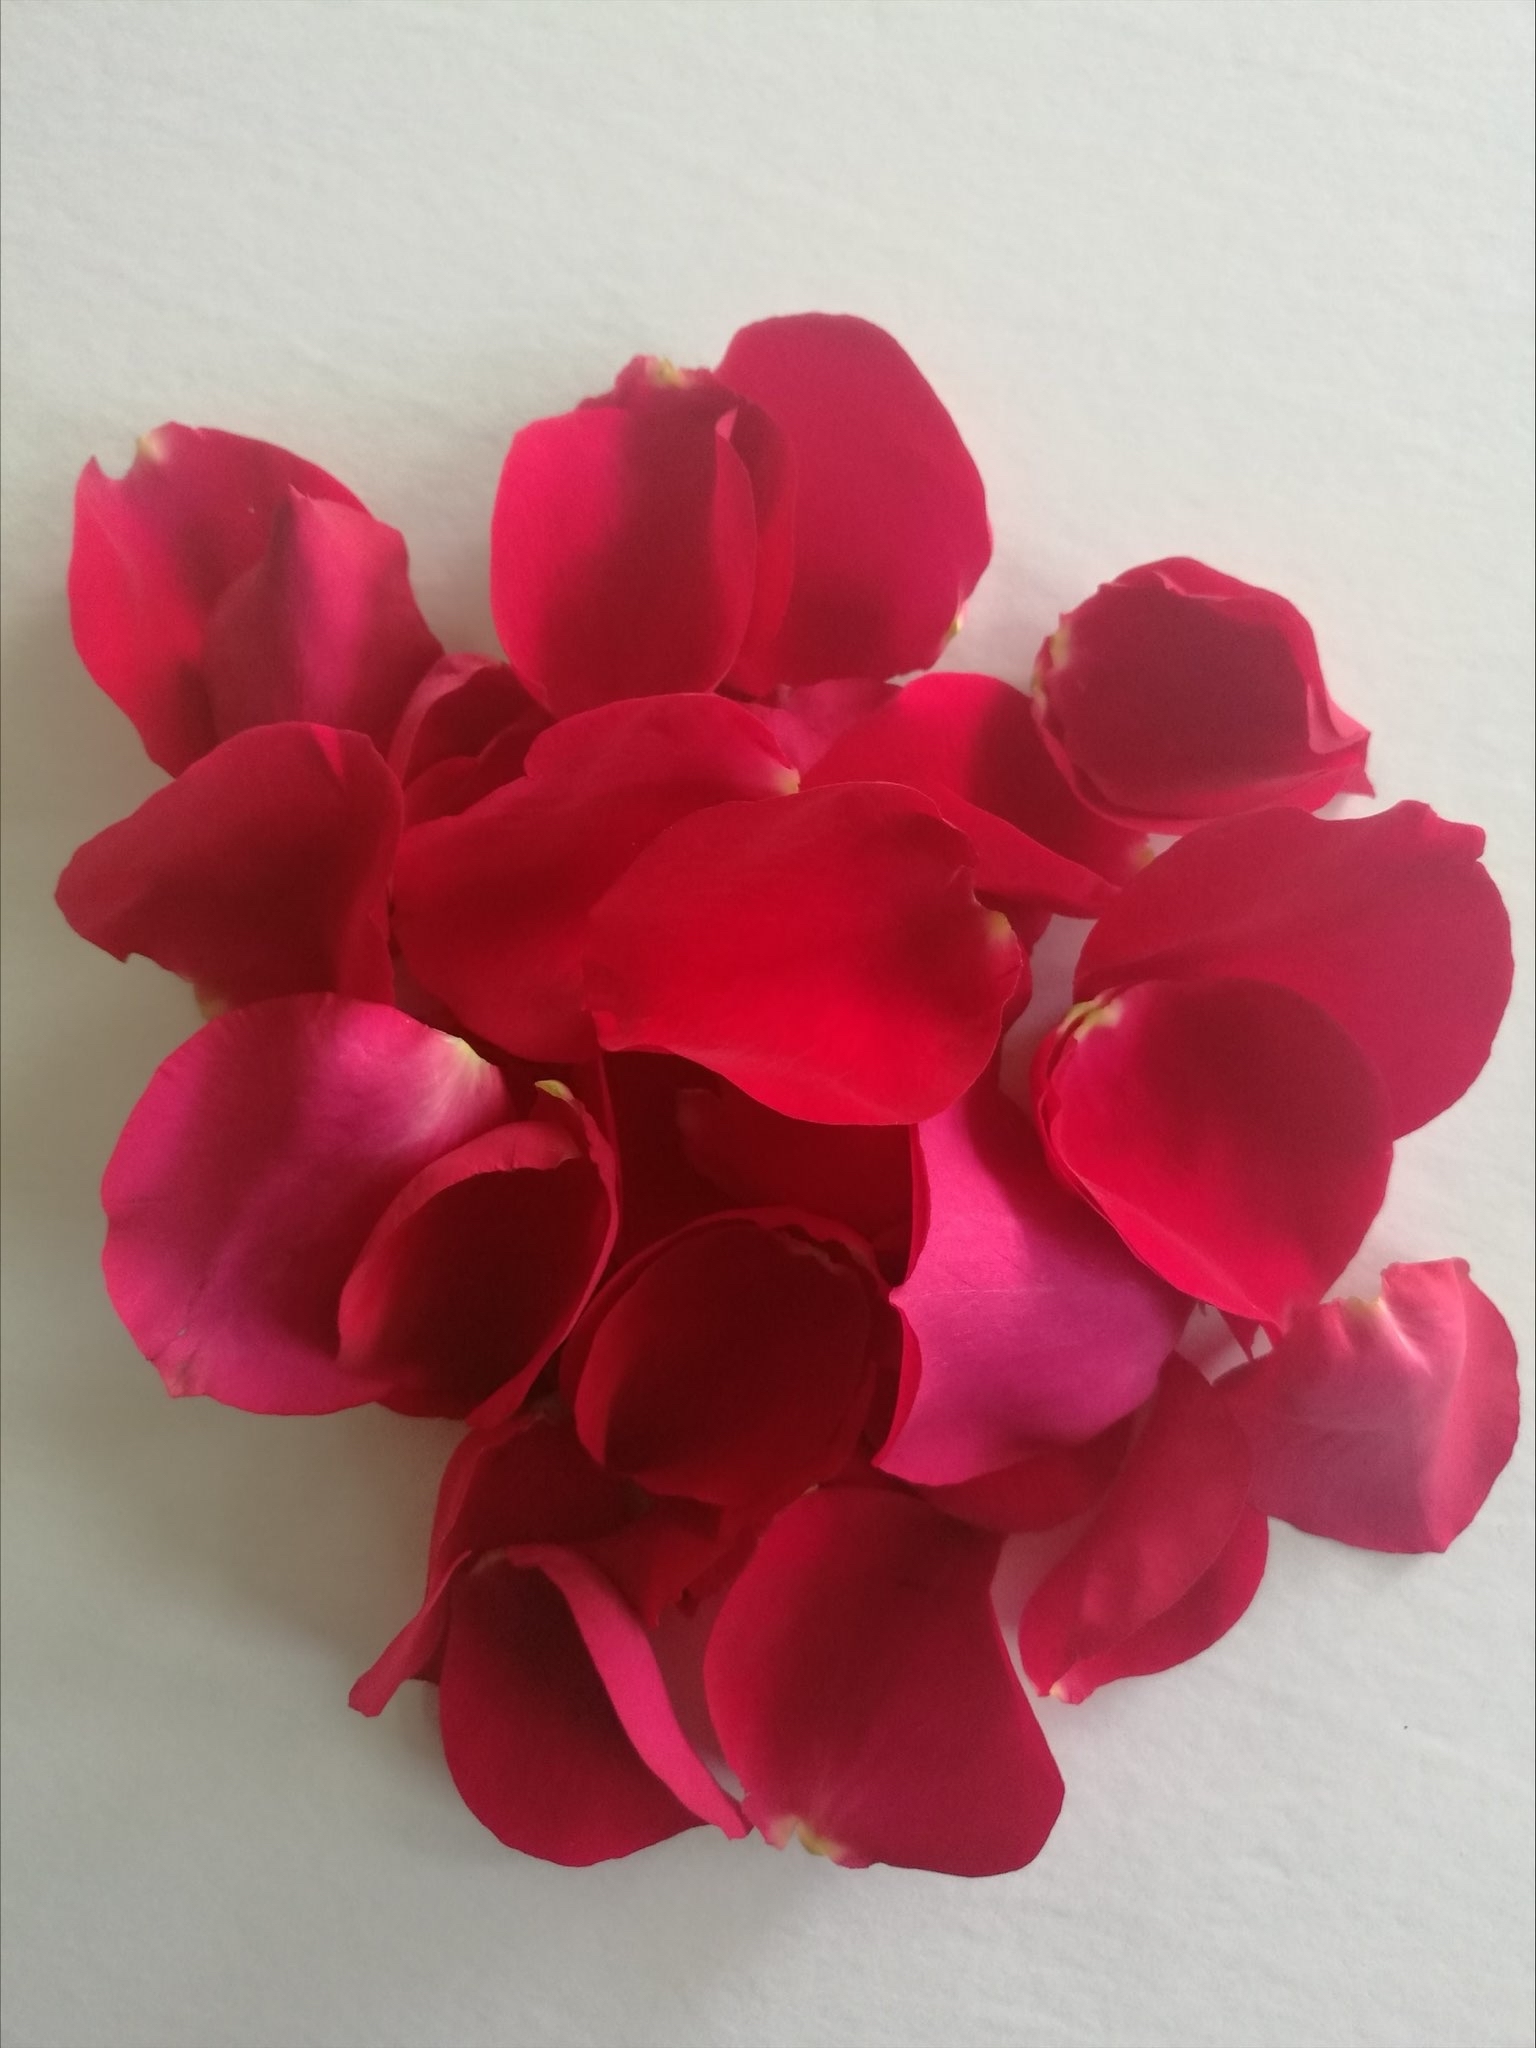 Rose Flower Petals - Red